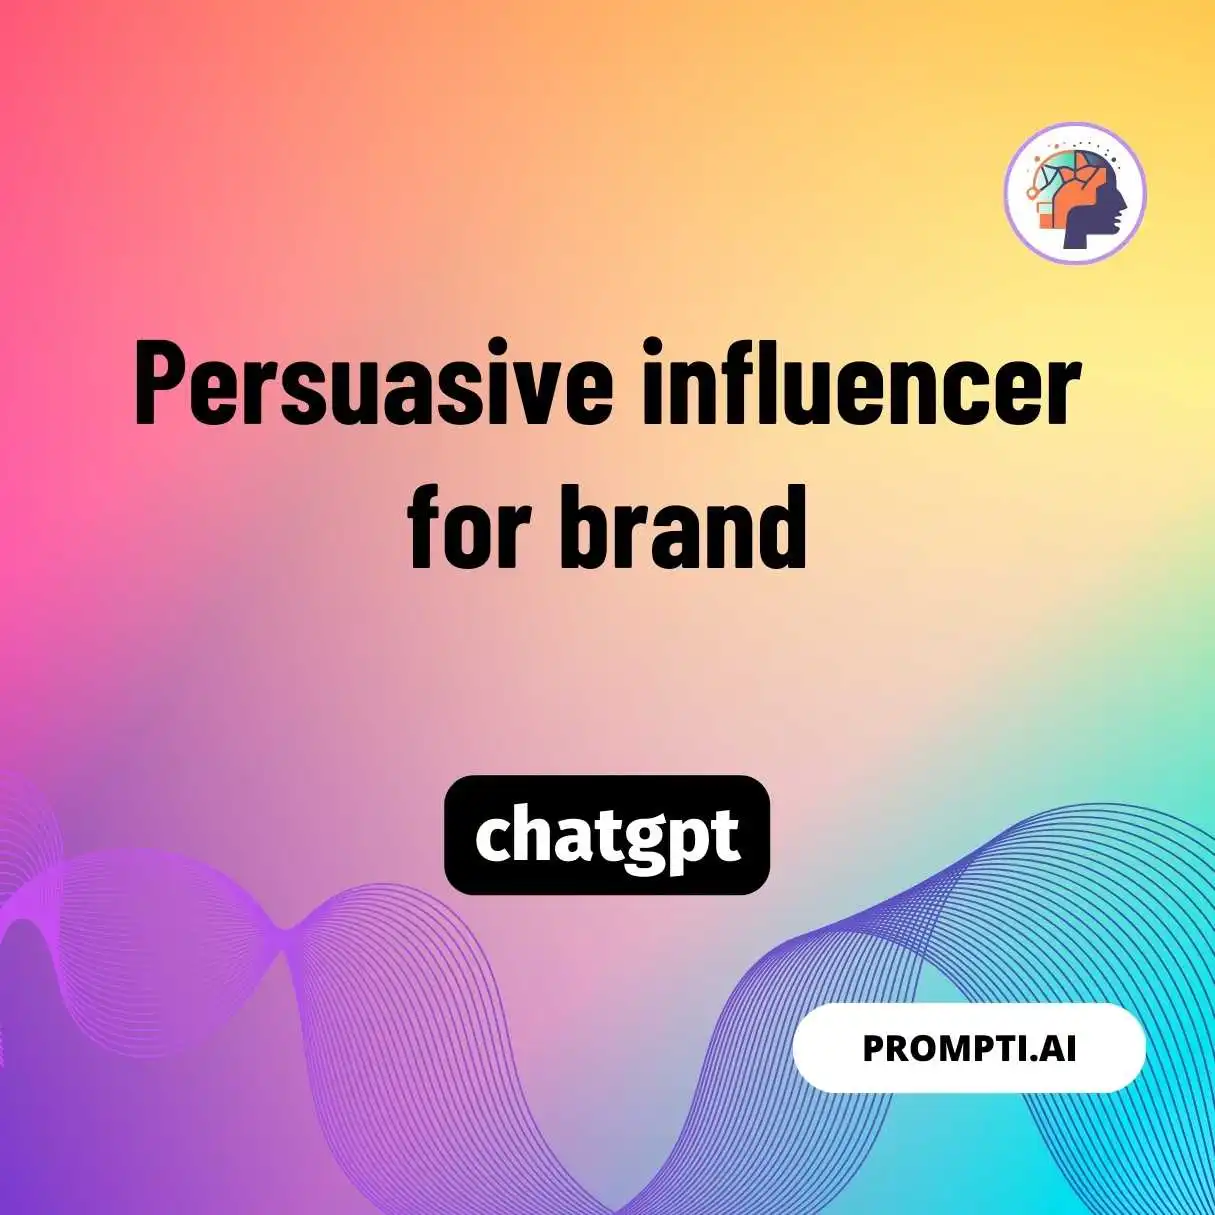 Persuasive influencer for brand